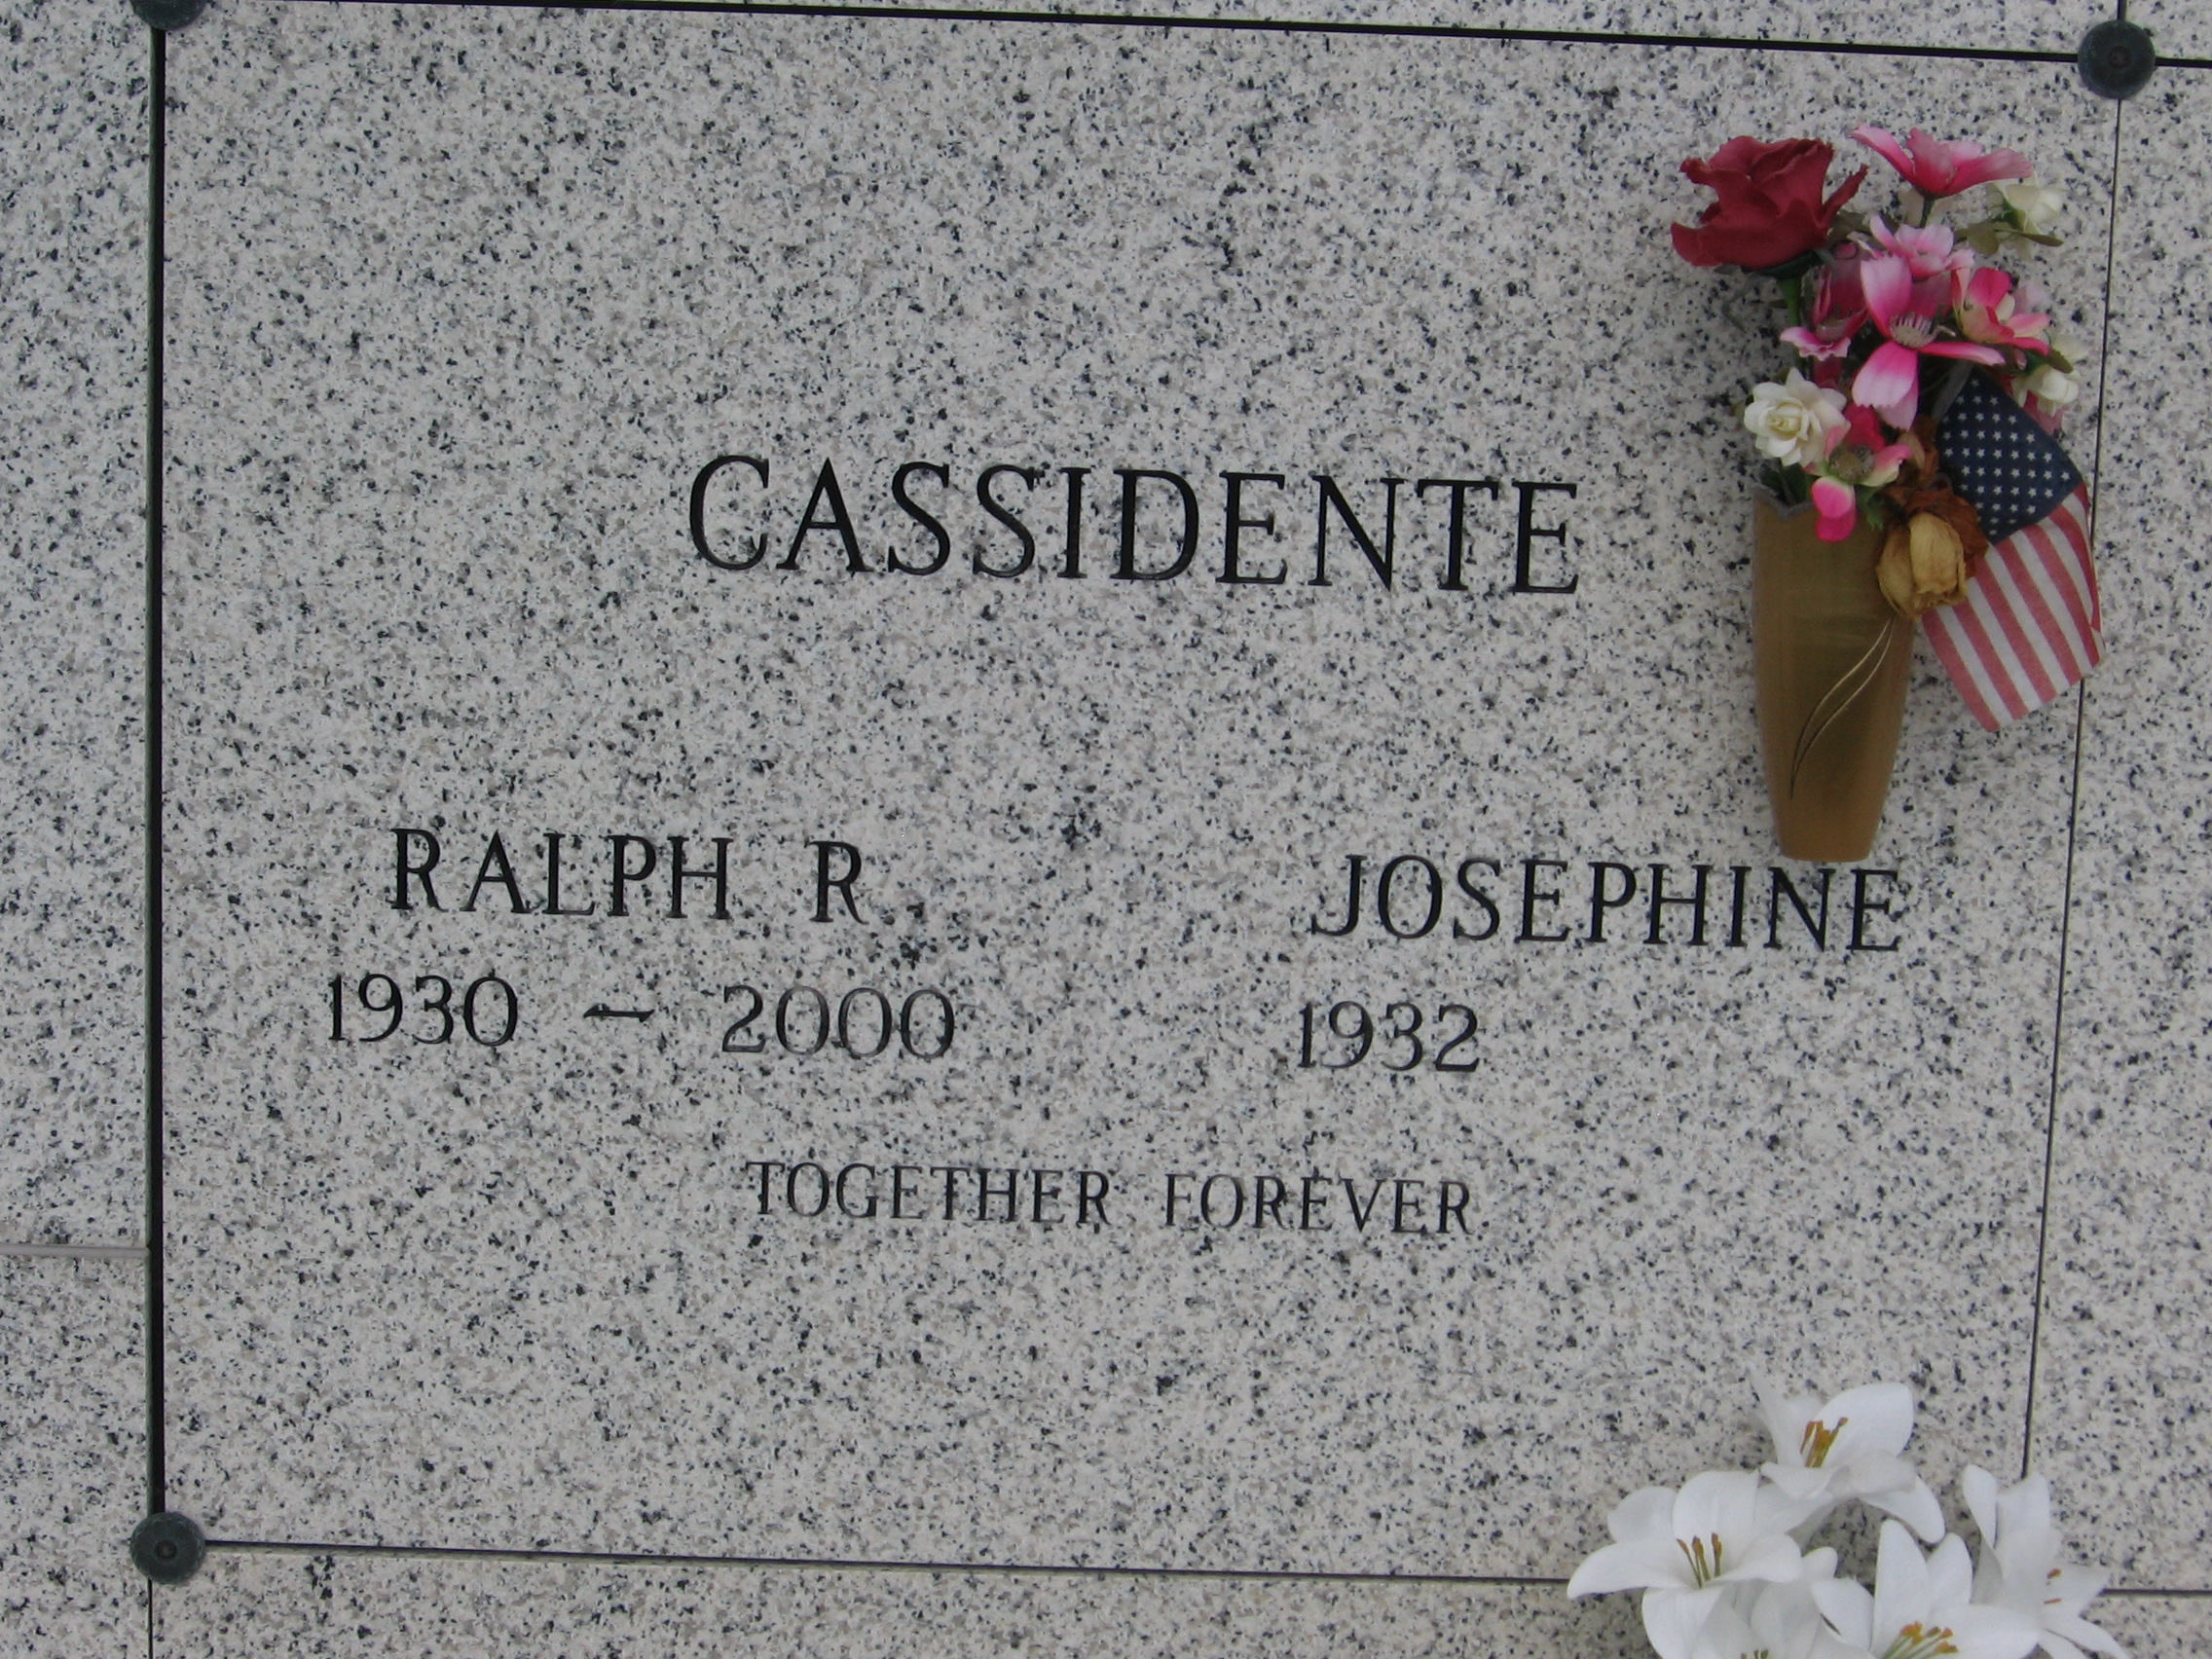 Josephine Cassidente